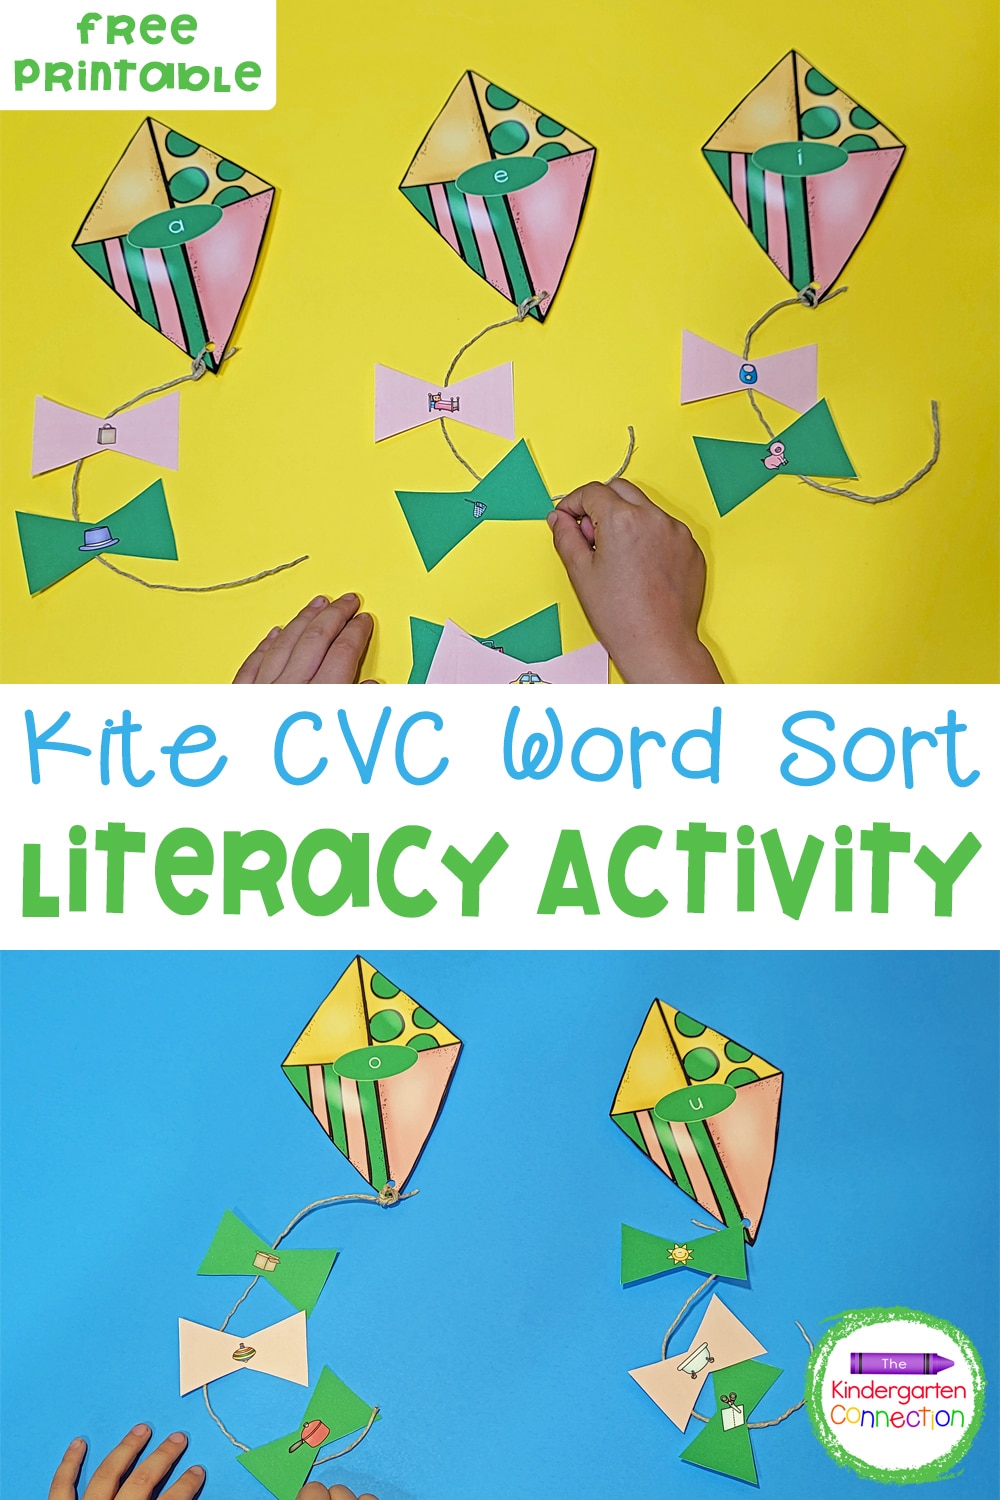 Kite CVC Word Sorting Activity